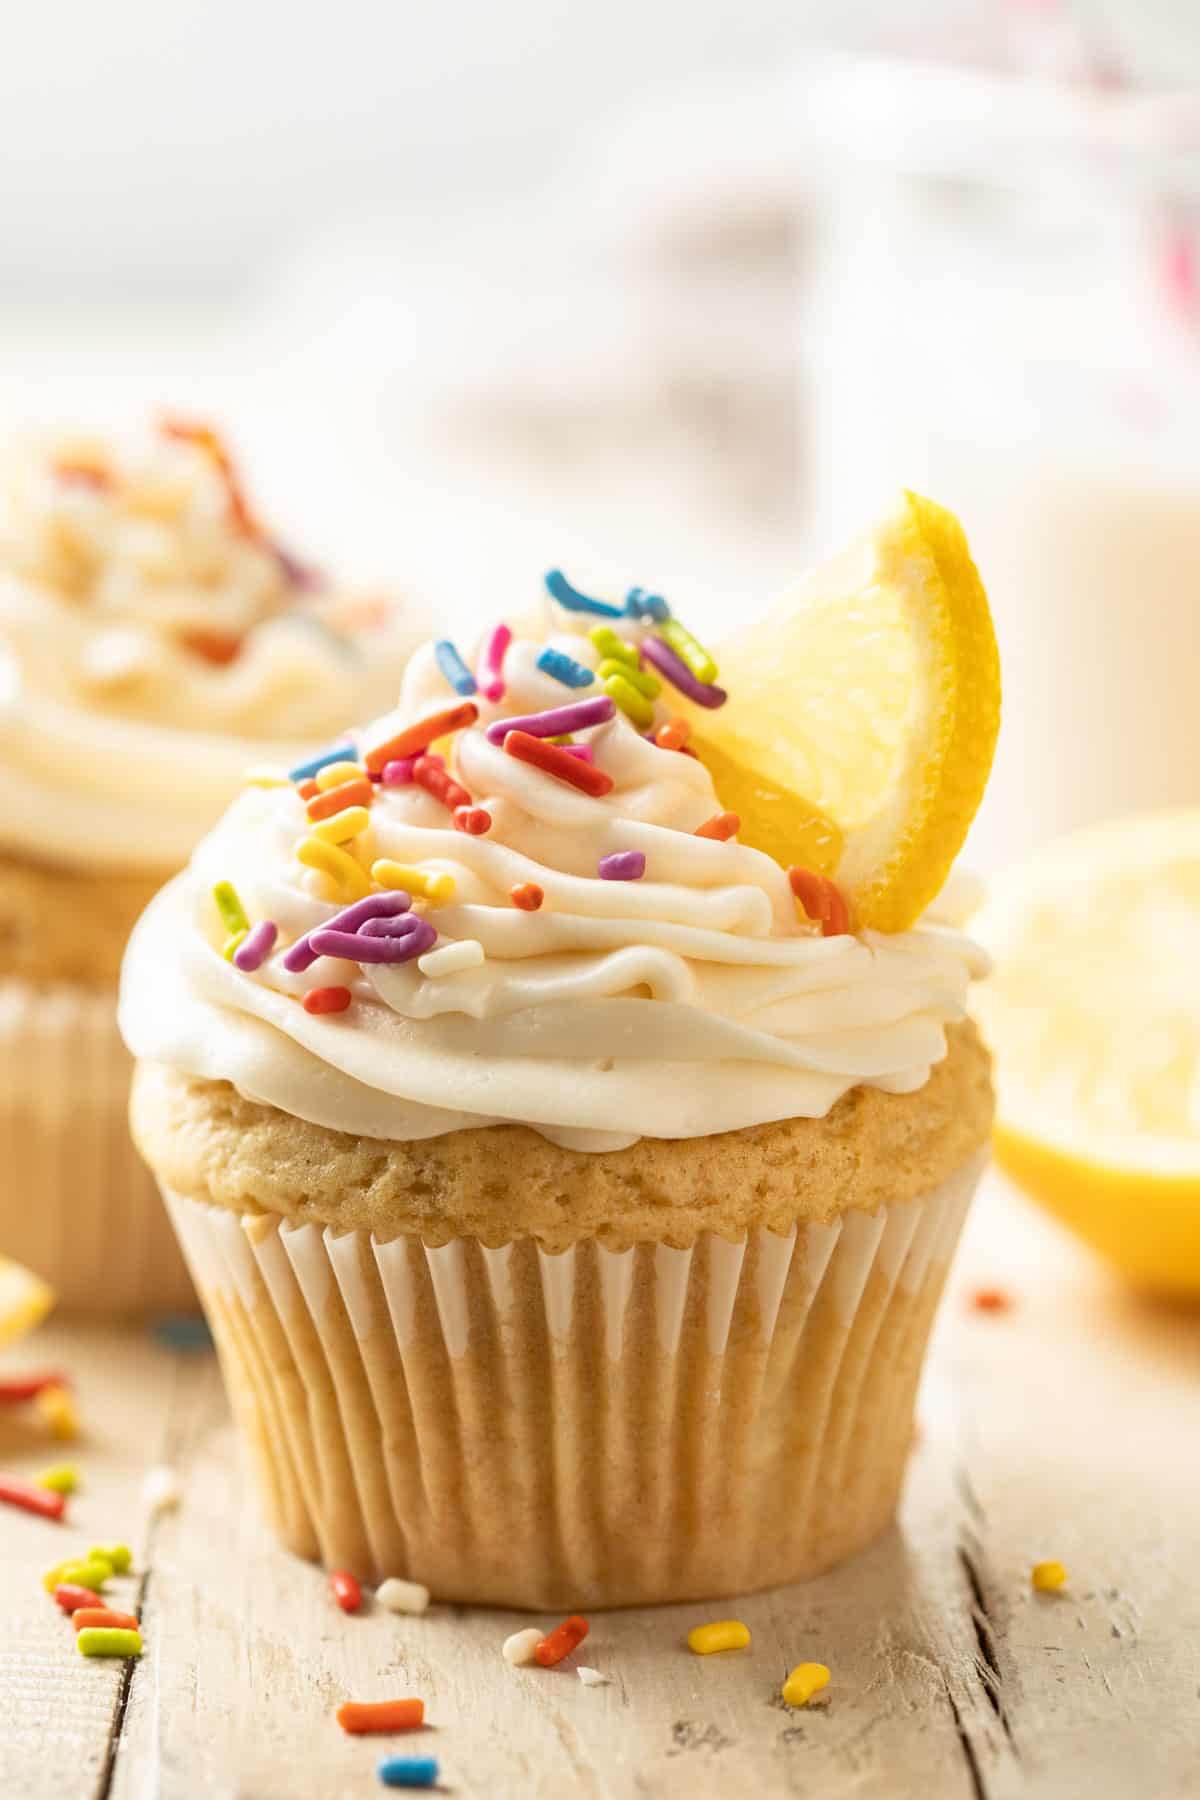 Vegan Lemon Cupcake topped with frosting, rainbow sprinkles, and a lemon slice.